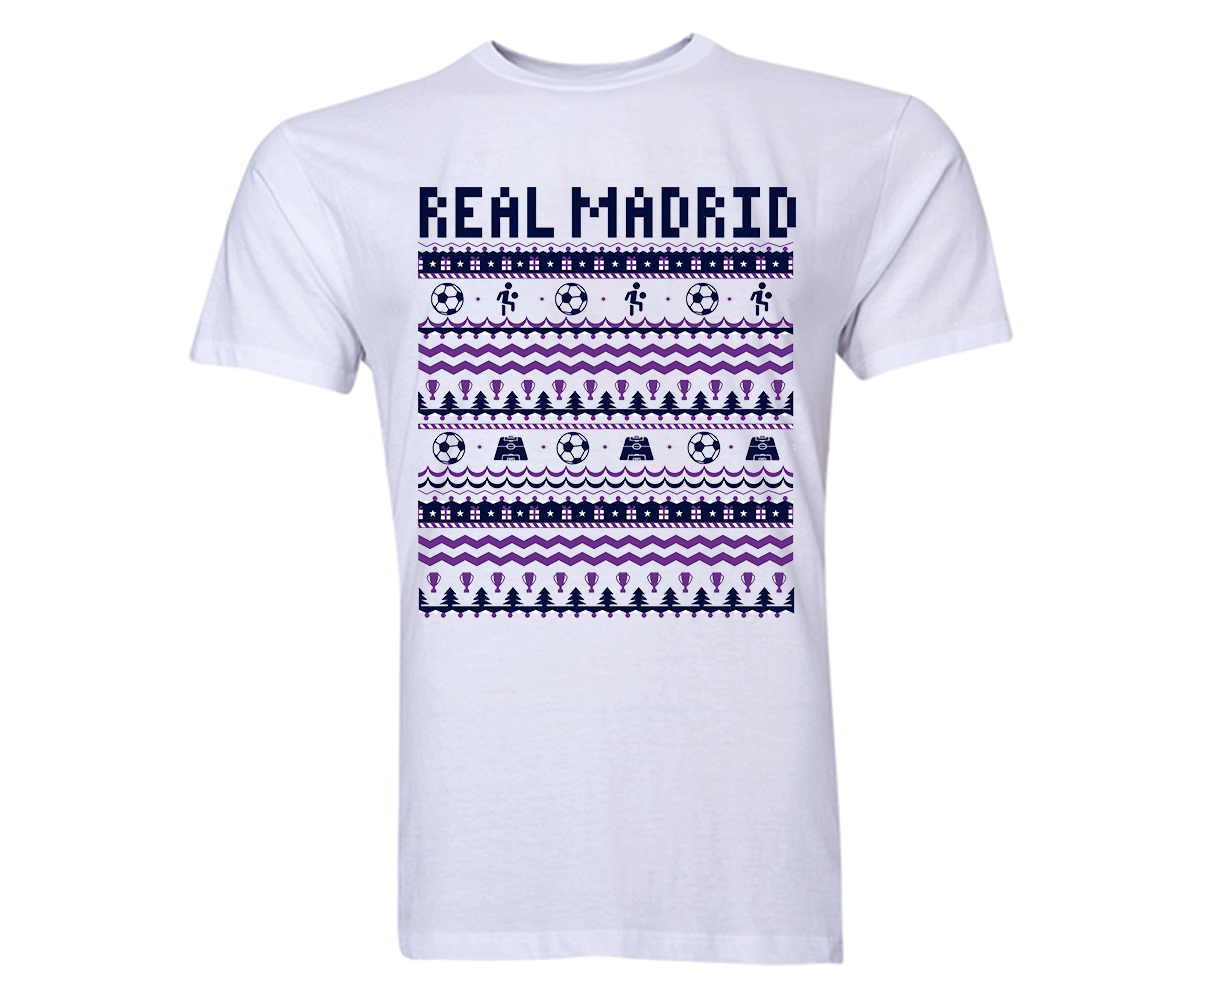 Real Madrid Christmas T-Shirt (White)